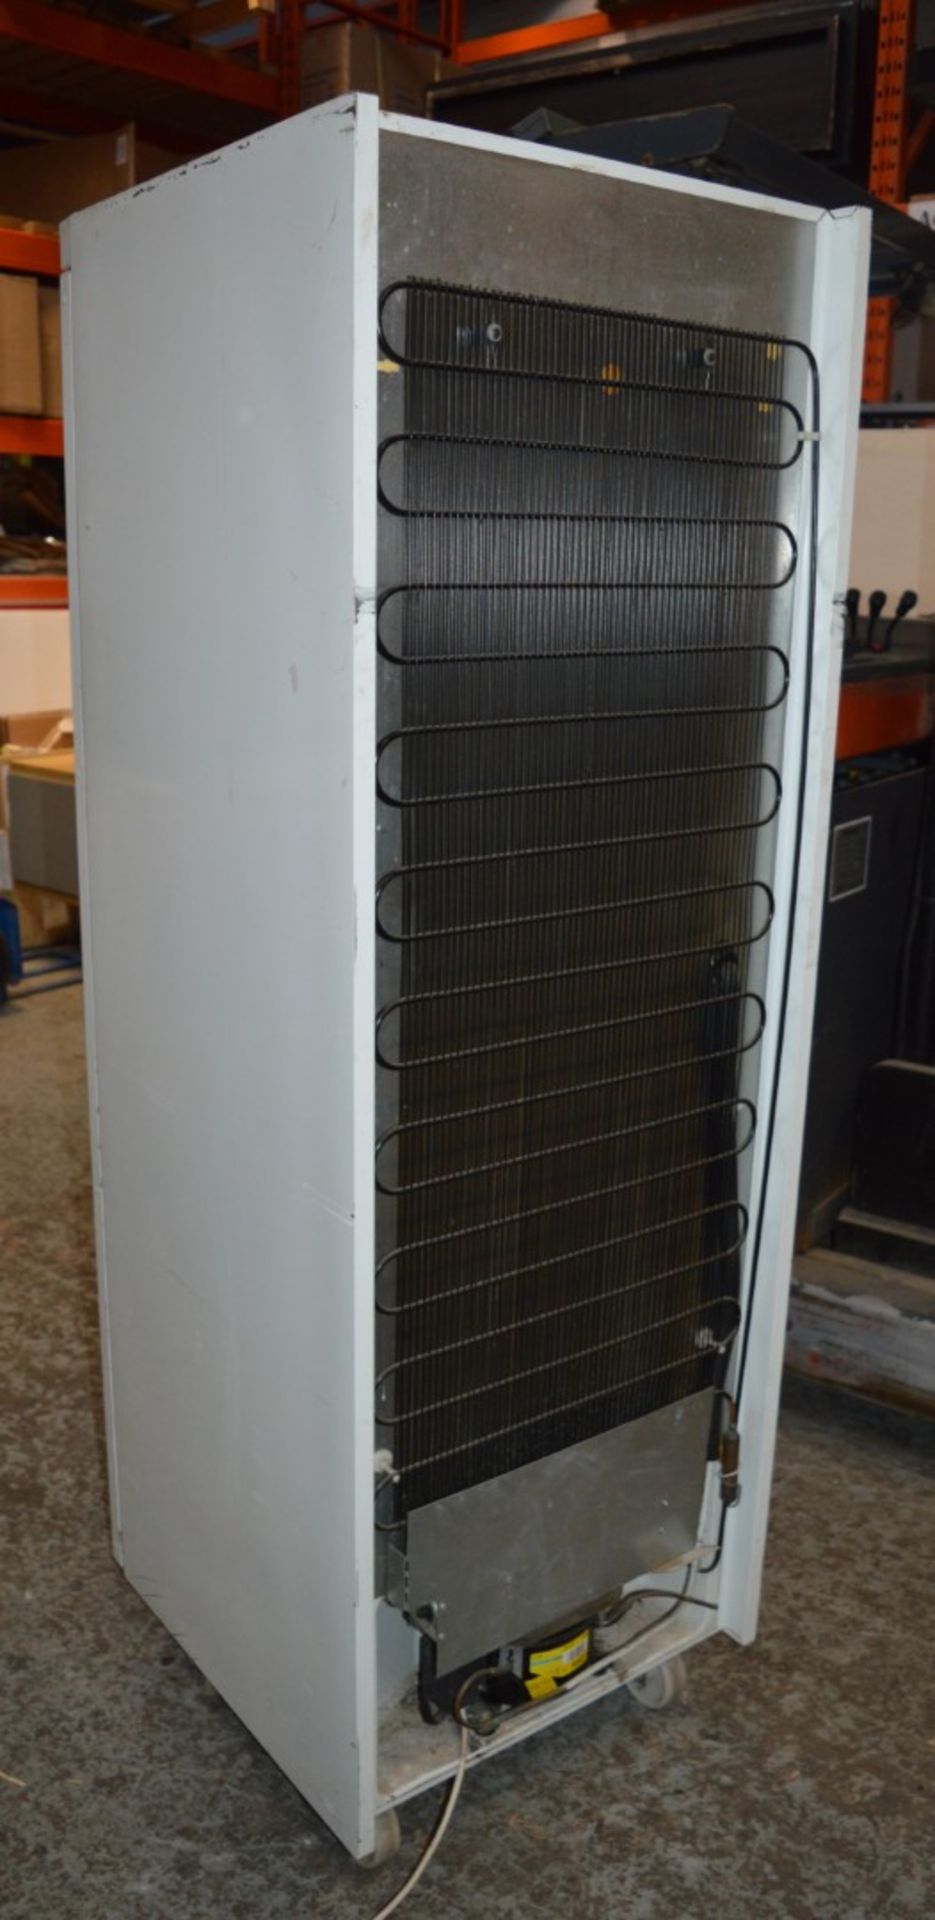 1 x Gram K400LU Commercial Refrigerator - Upright White Catering Fridge - CL295 - Ref M294 - - Image 5 of 5